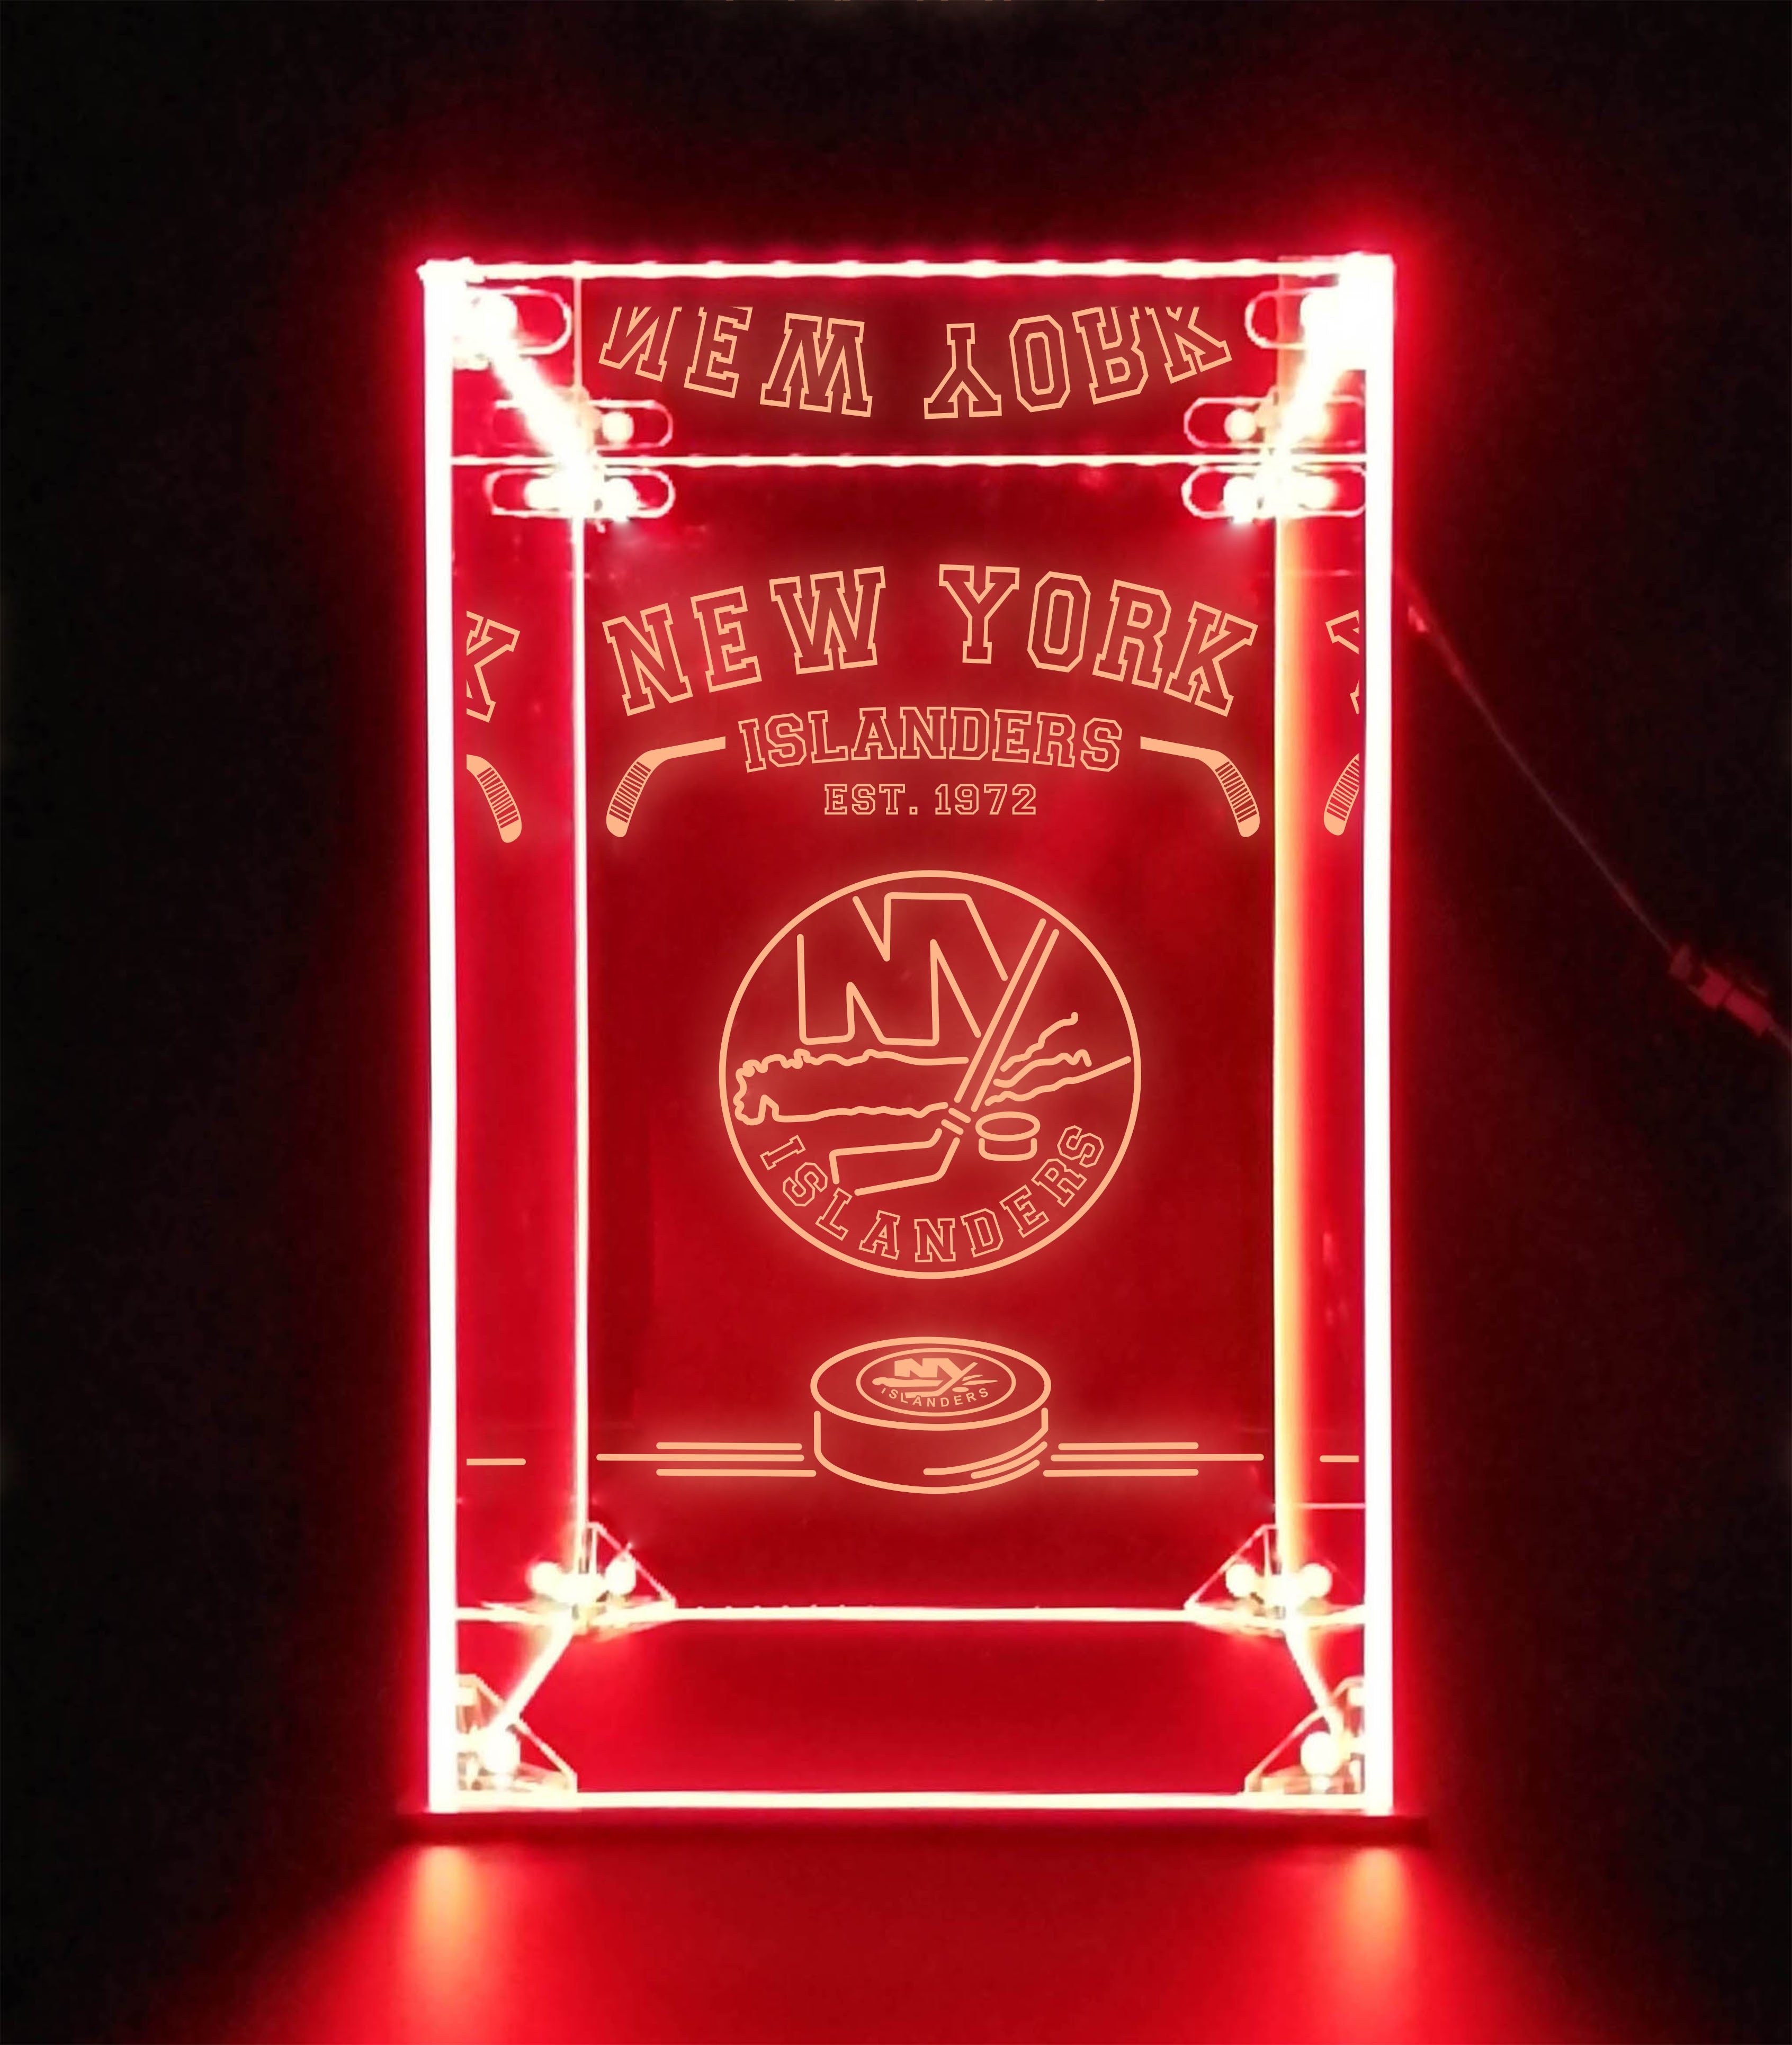 LED Display Case For New York Islanders Sports Memorabilia